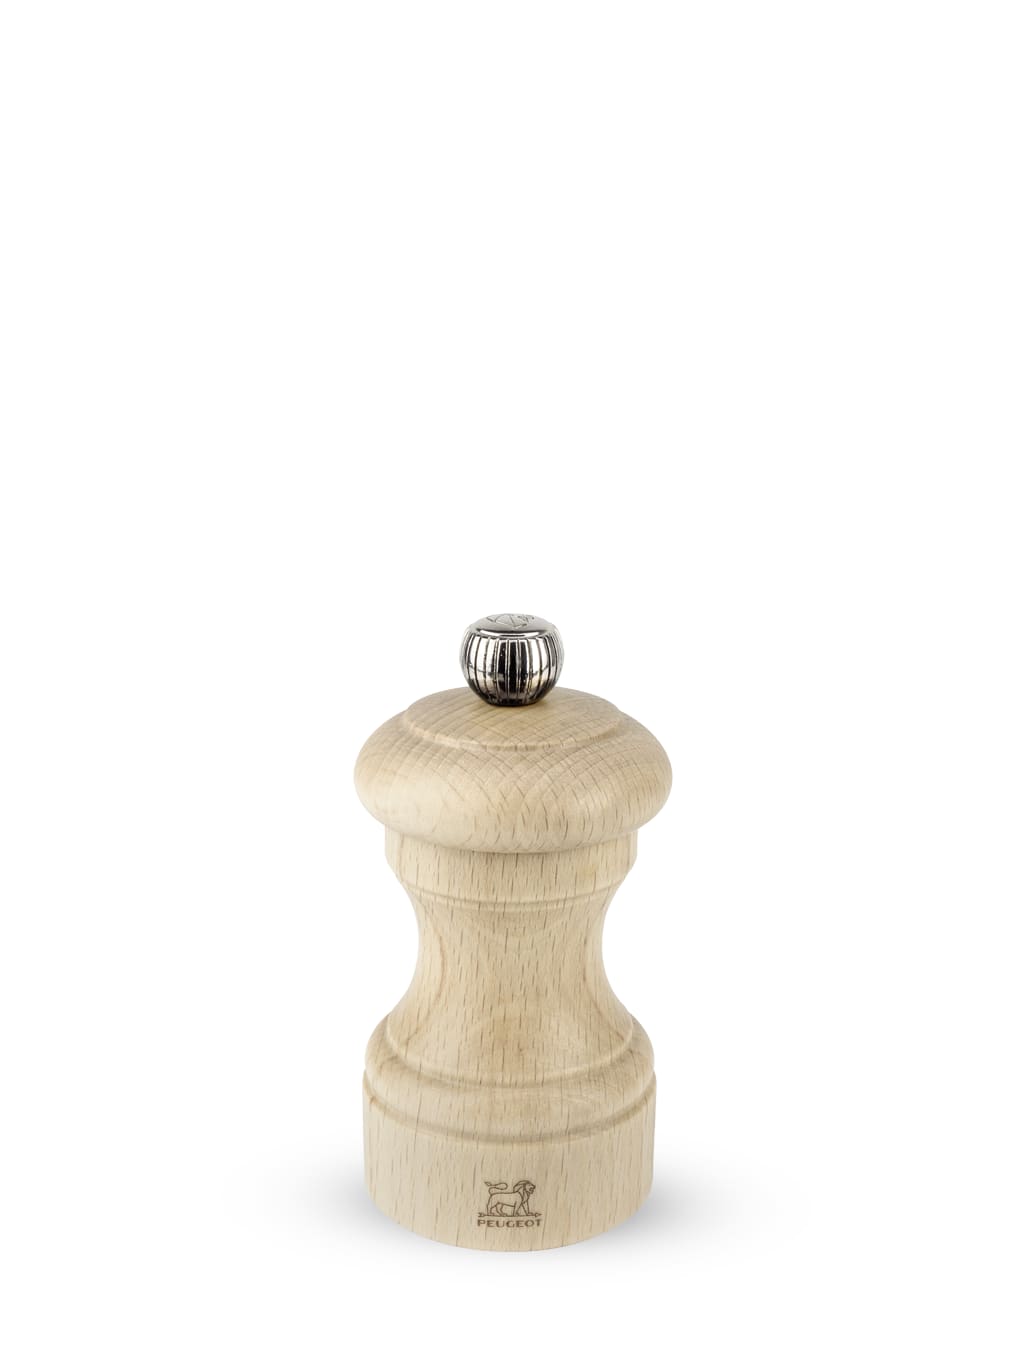 moulin à sel manuel en bois naturel h10cm